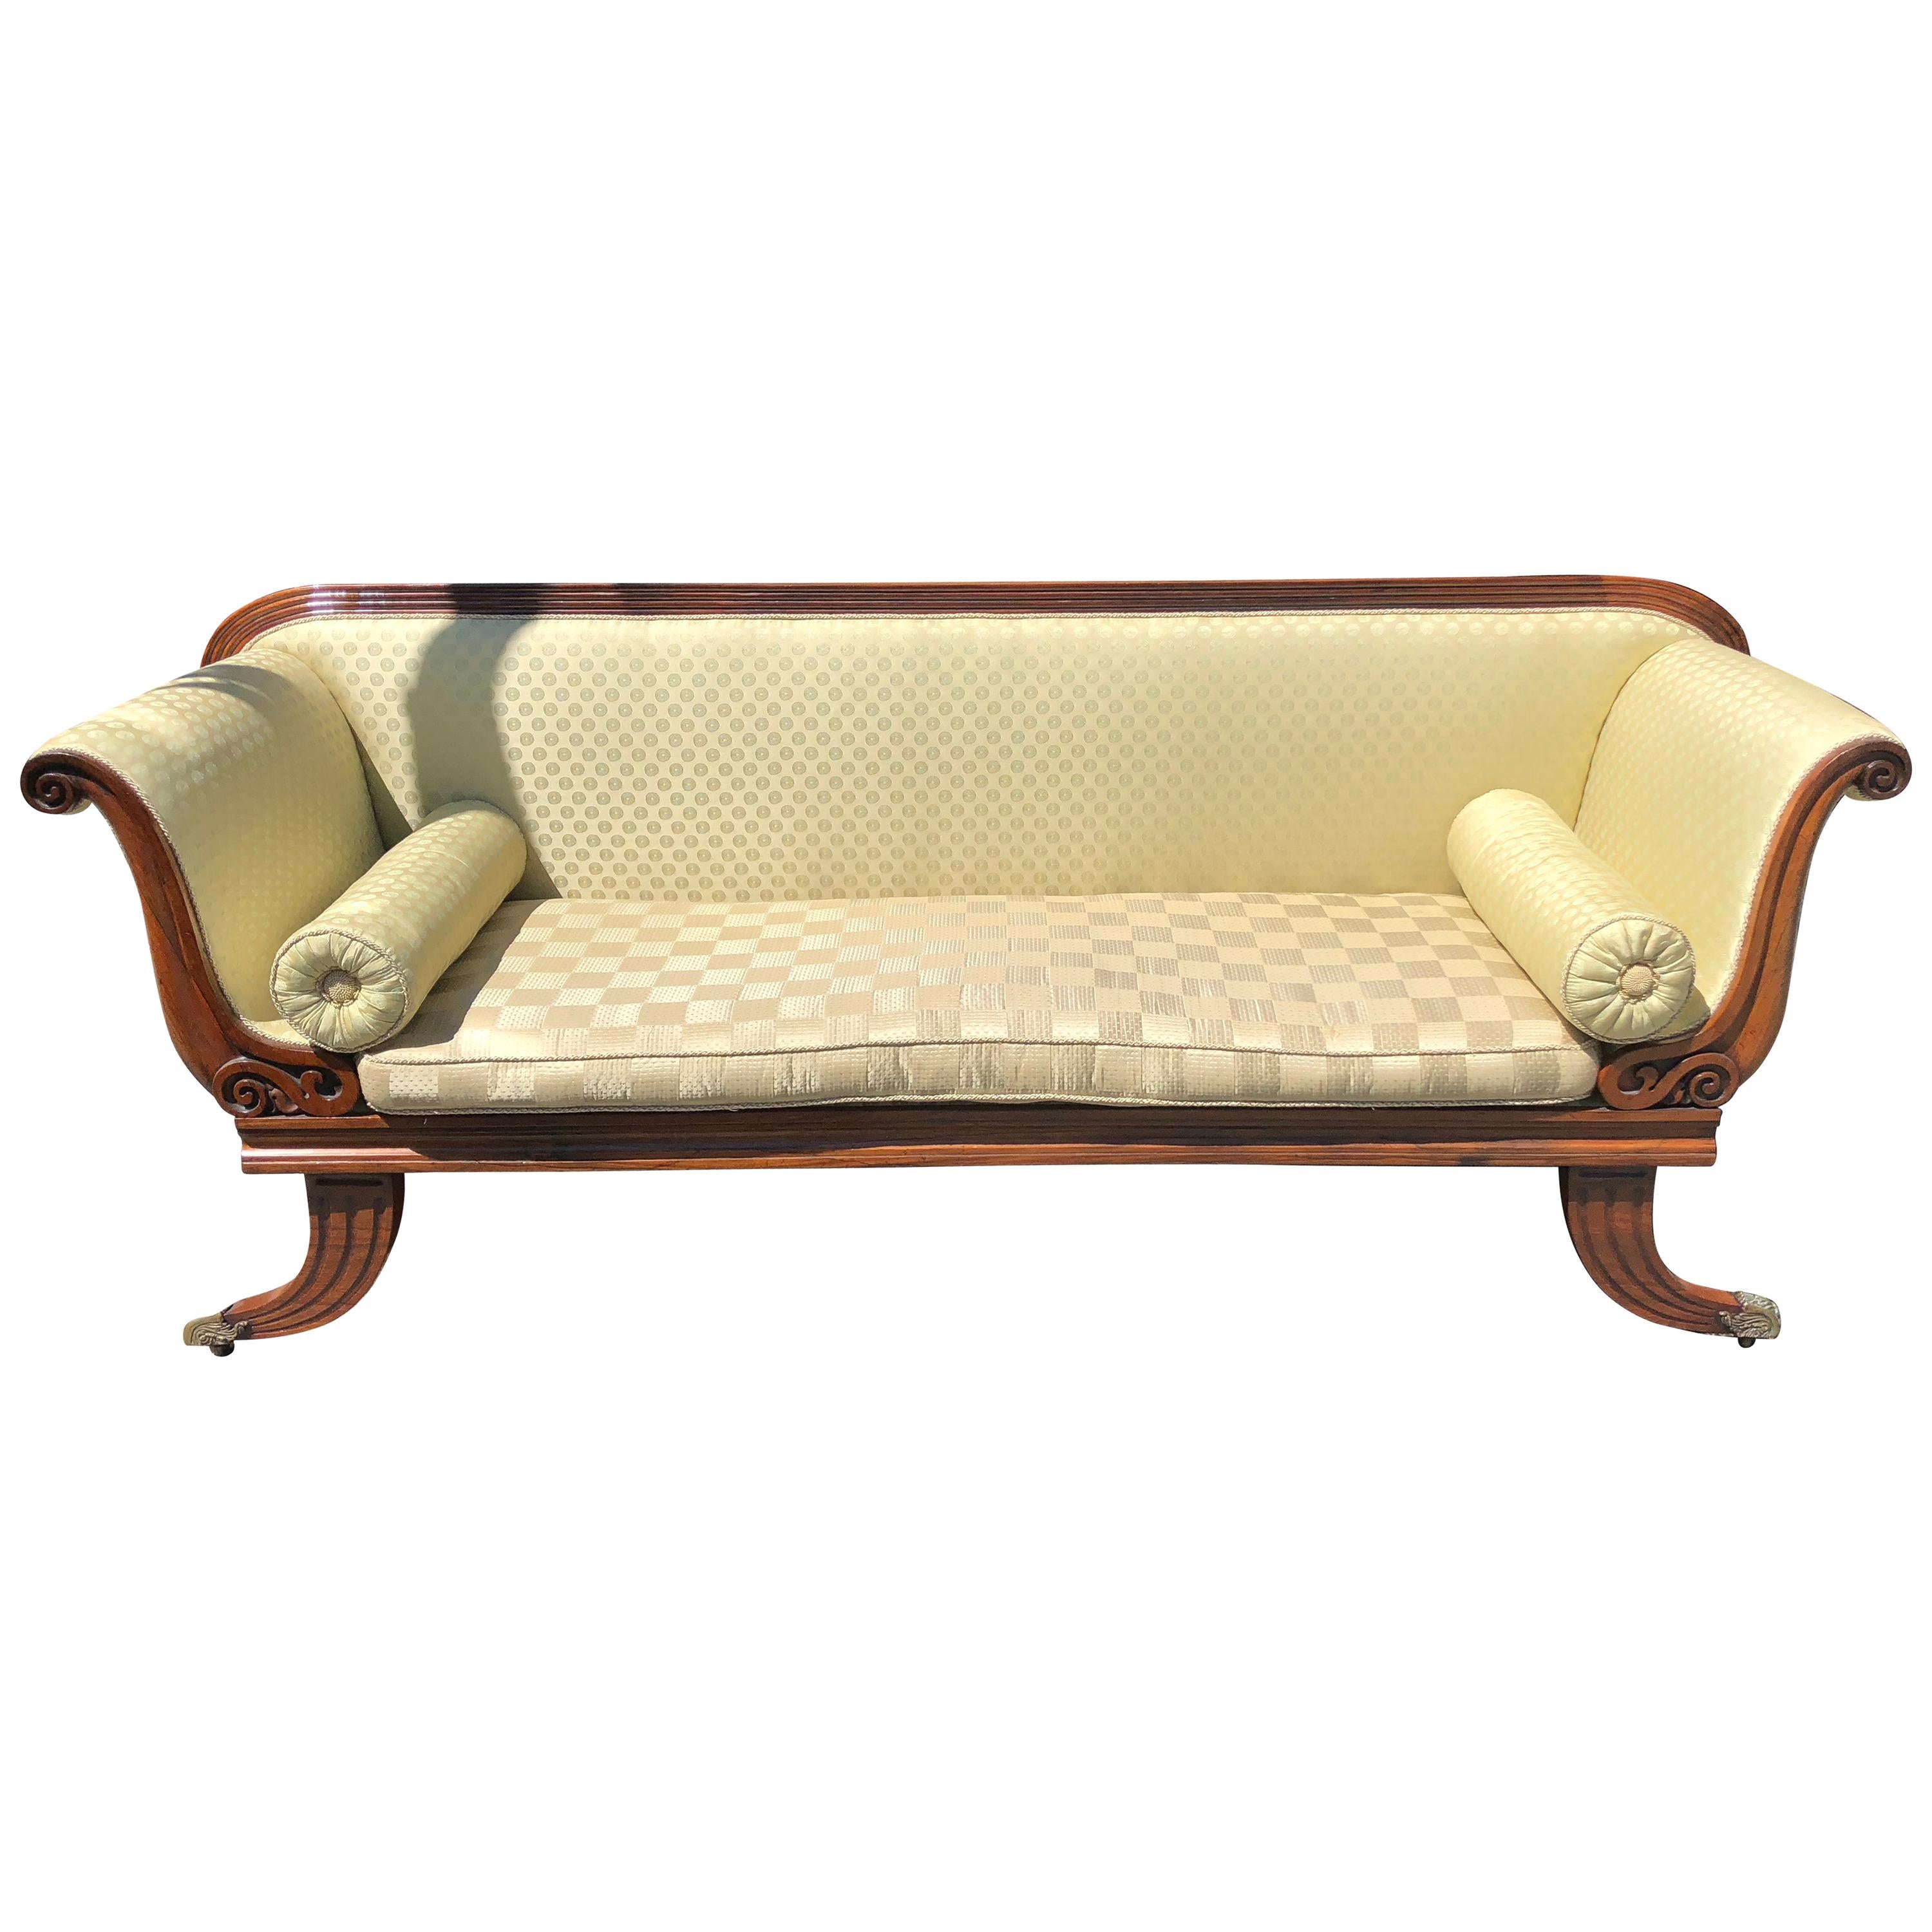 English Mahogany Regency Style Sofa Flat Back Sofa on Elaborate Brass Casters